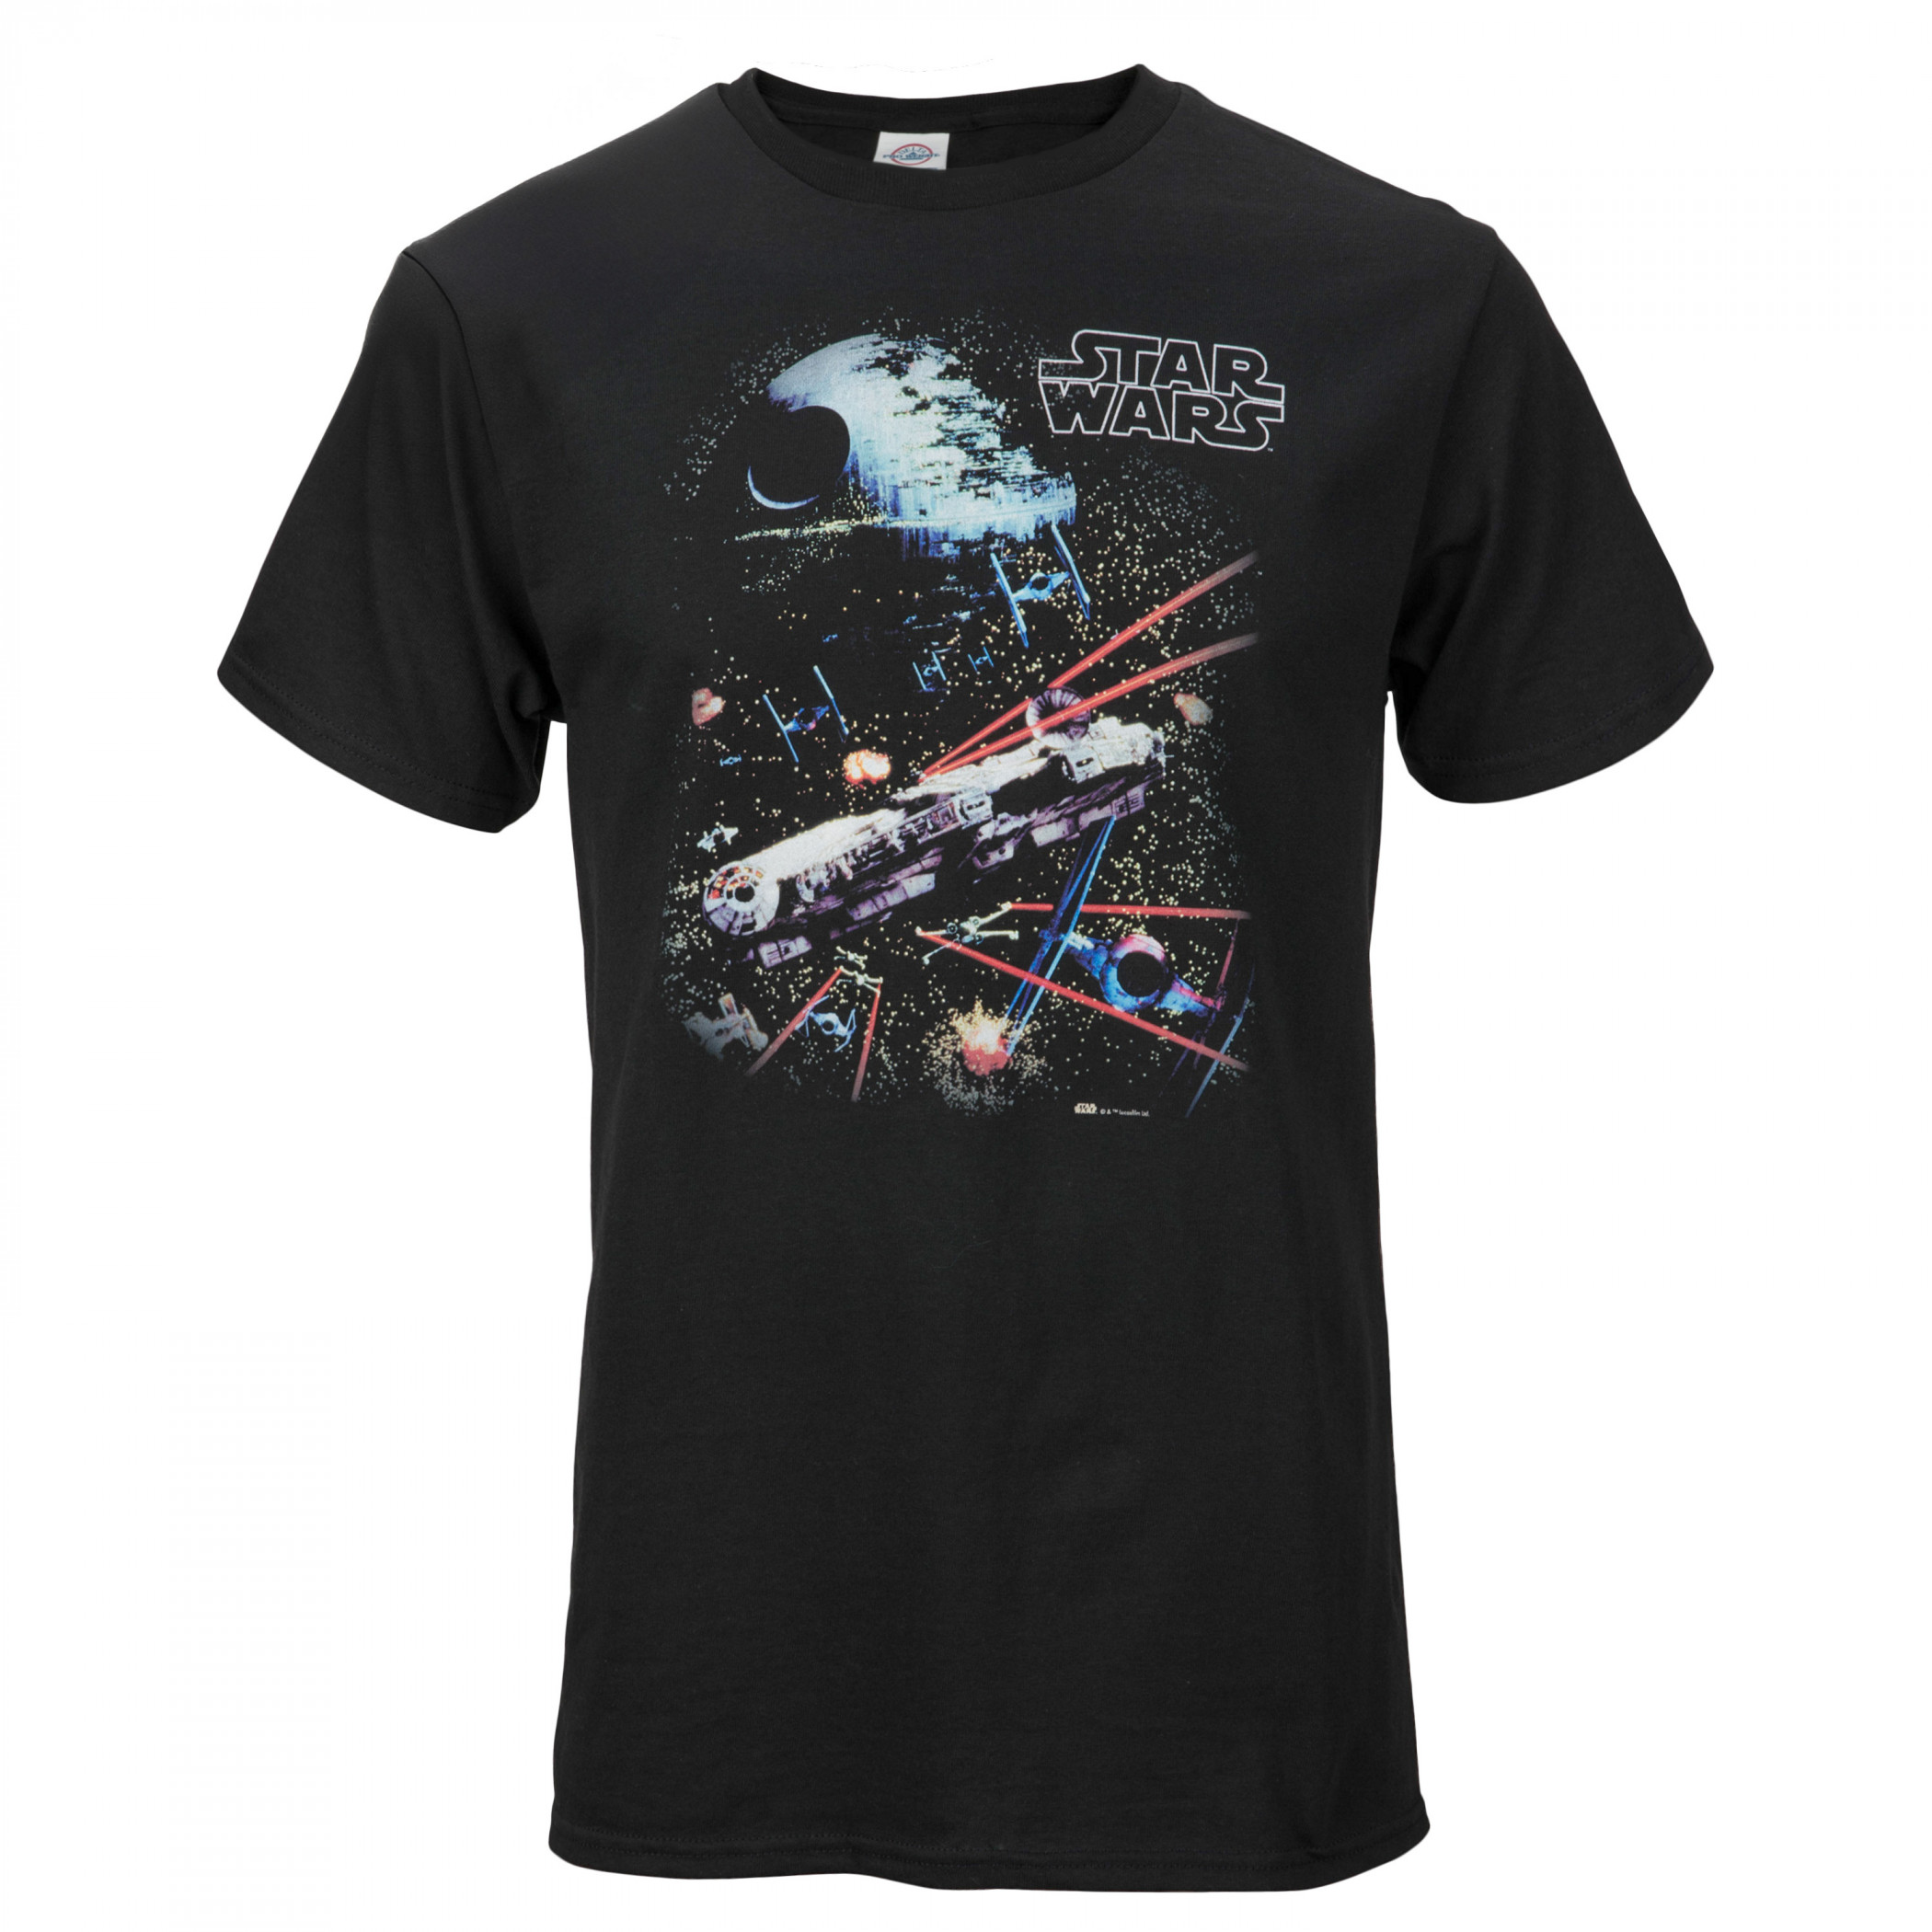 Star Wars Space Battle Portal Publications Poster T-Shirt